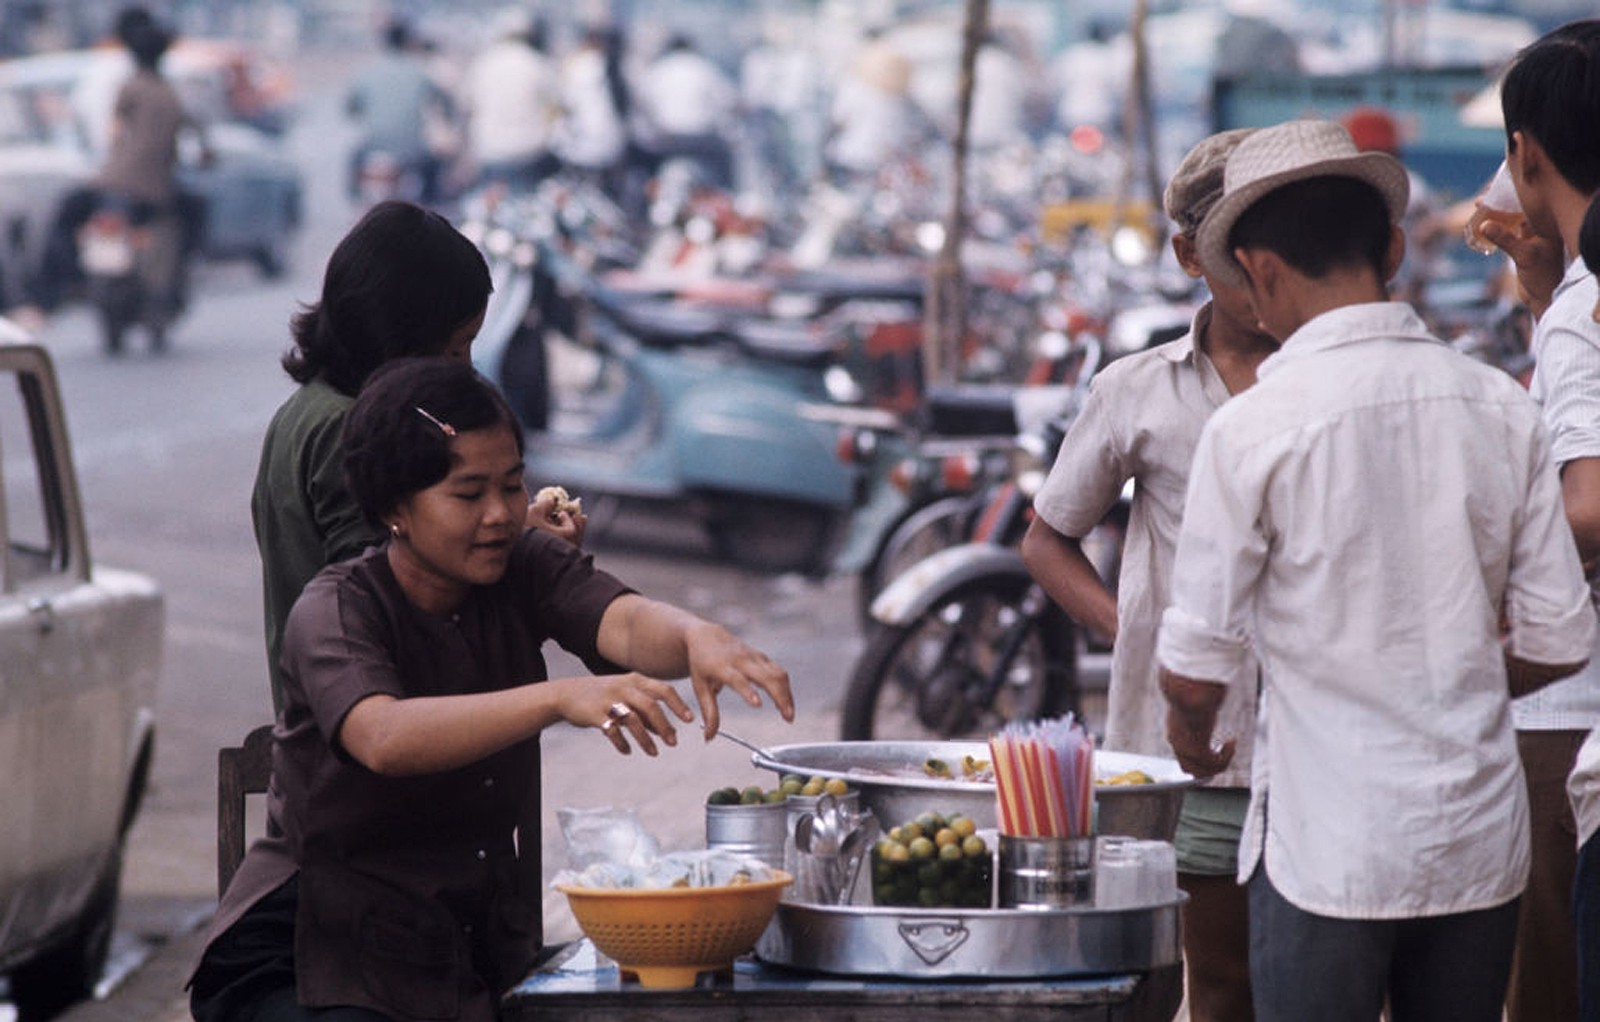 Interesting photos of Saigon women in 1972 under US photographer’s lens